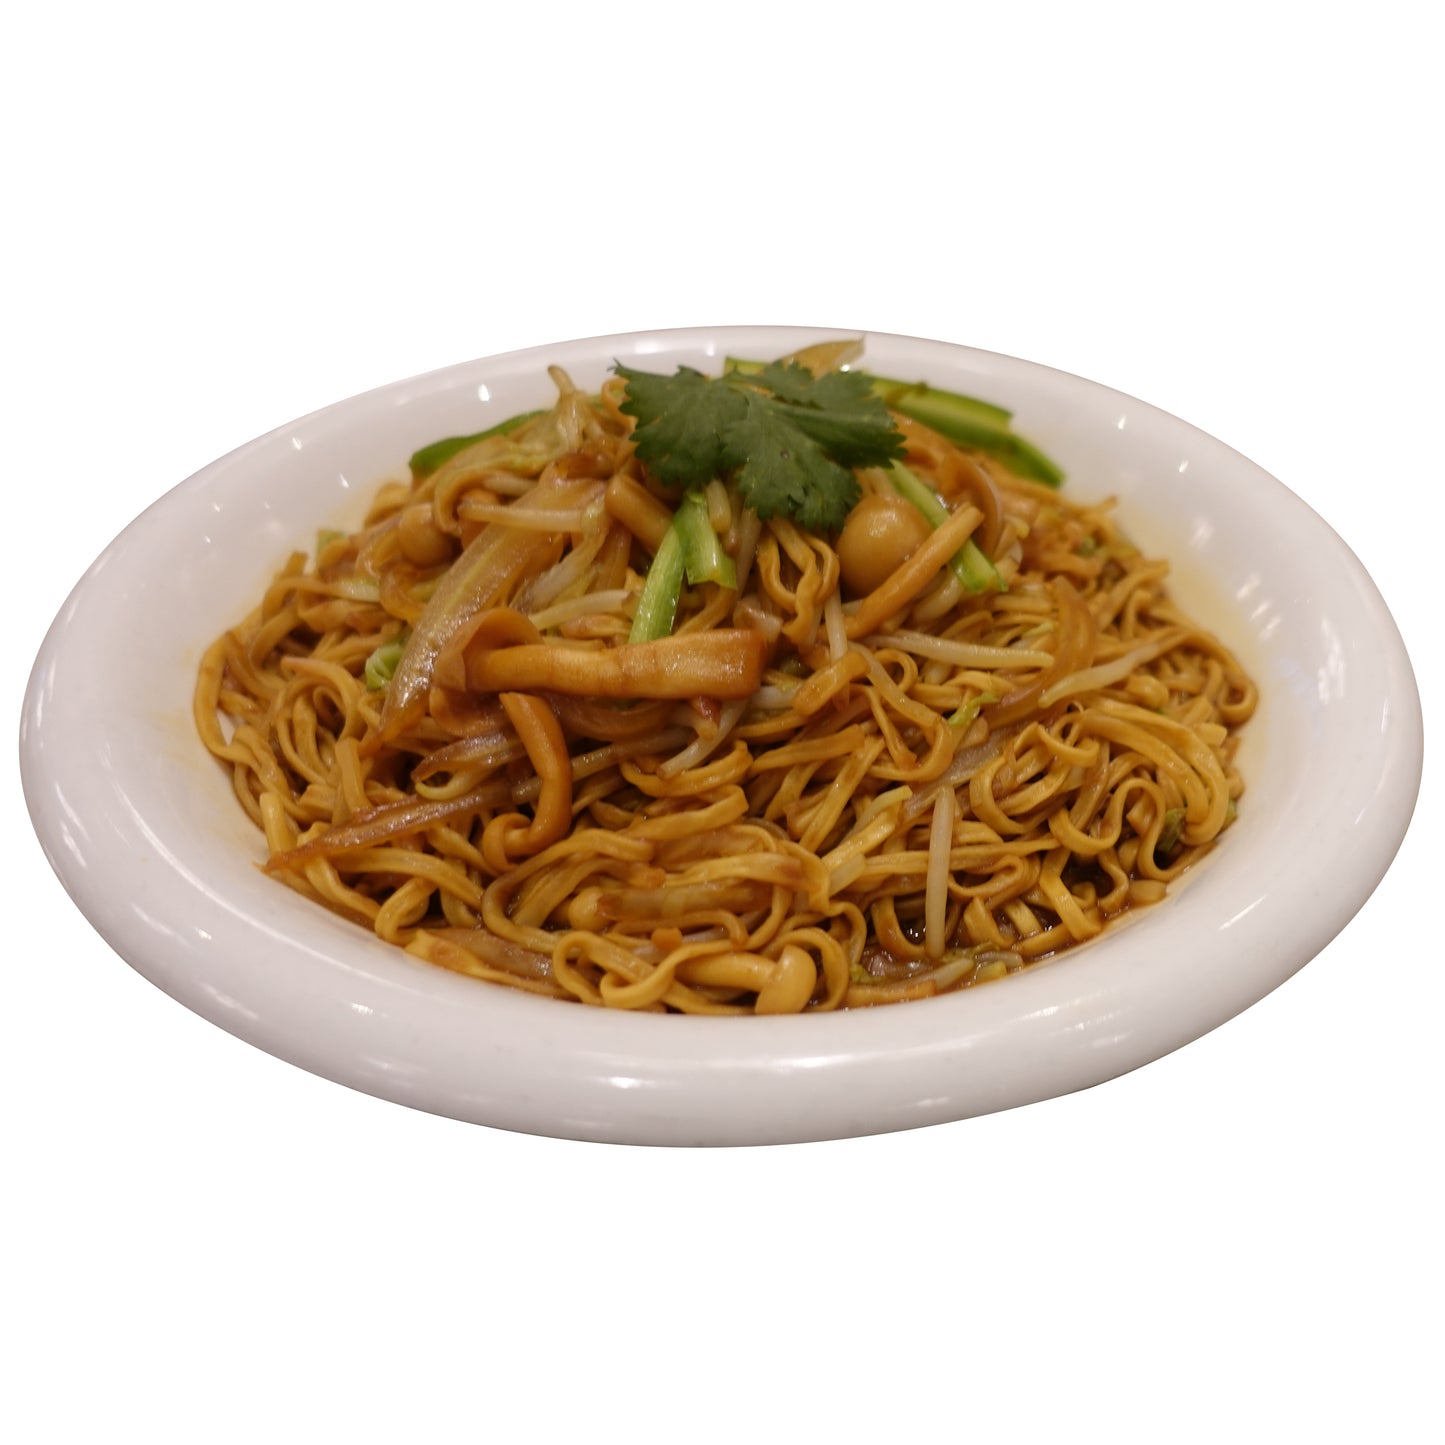 Braised E-Fu Noodles with Wild Mushroom 什菌菇香烧依面